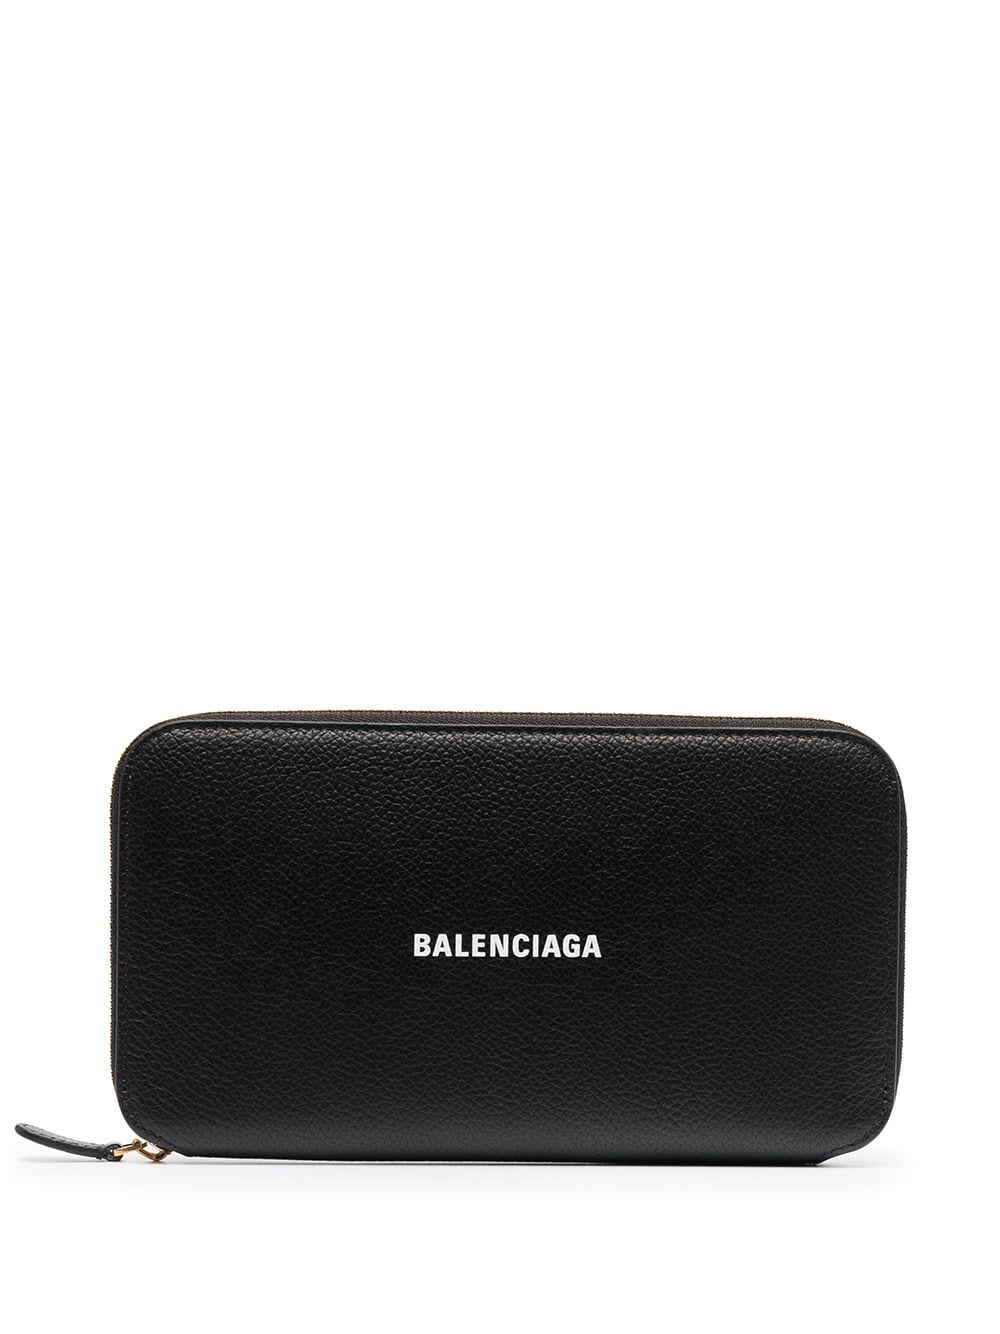 фото Balenciaga кошелек с логотипом